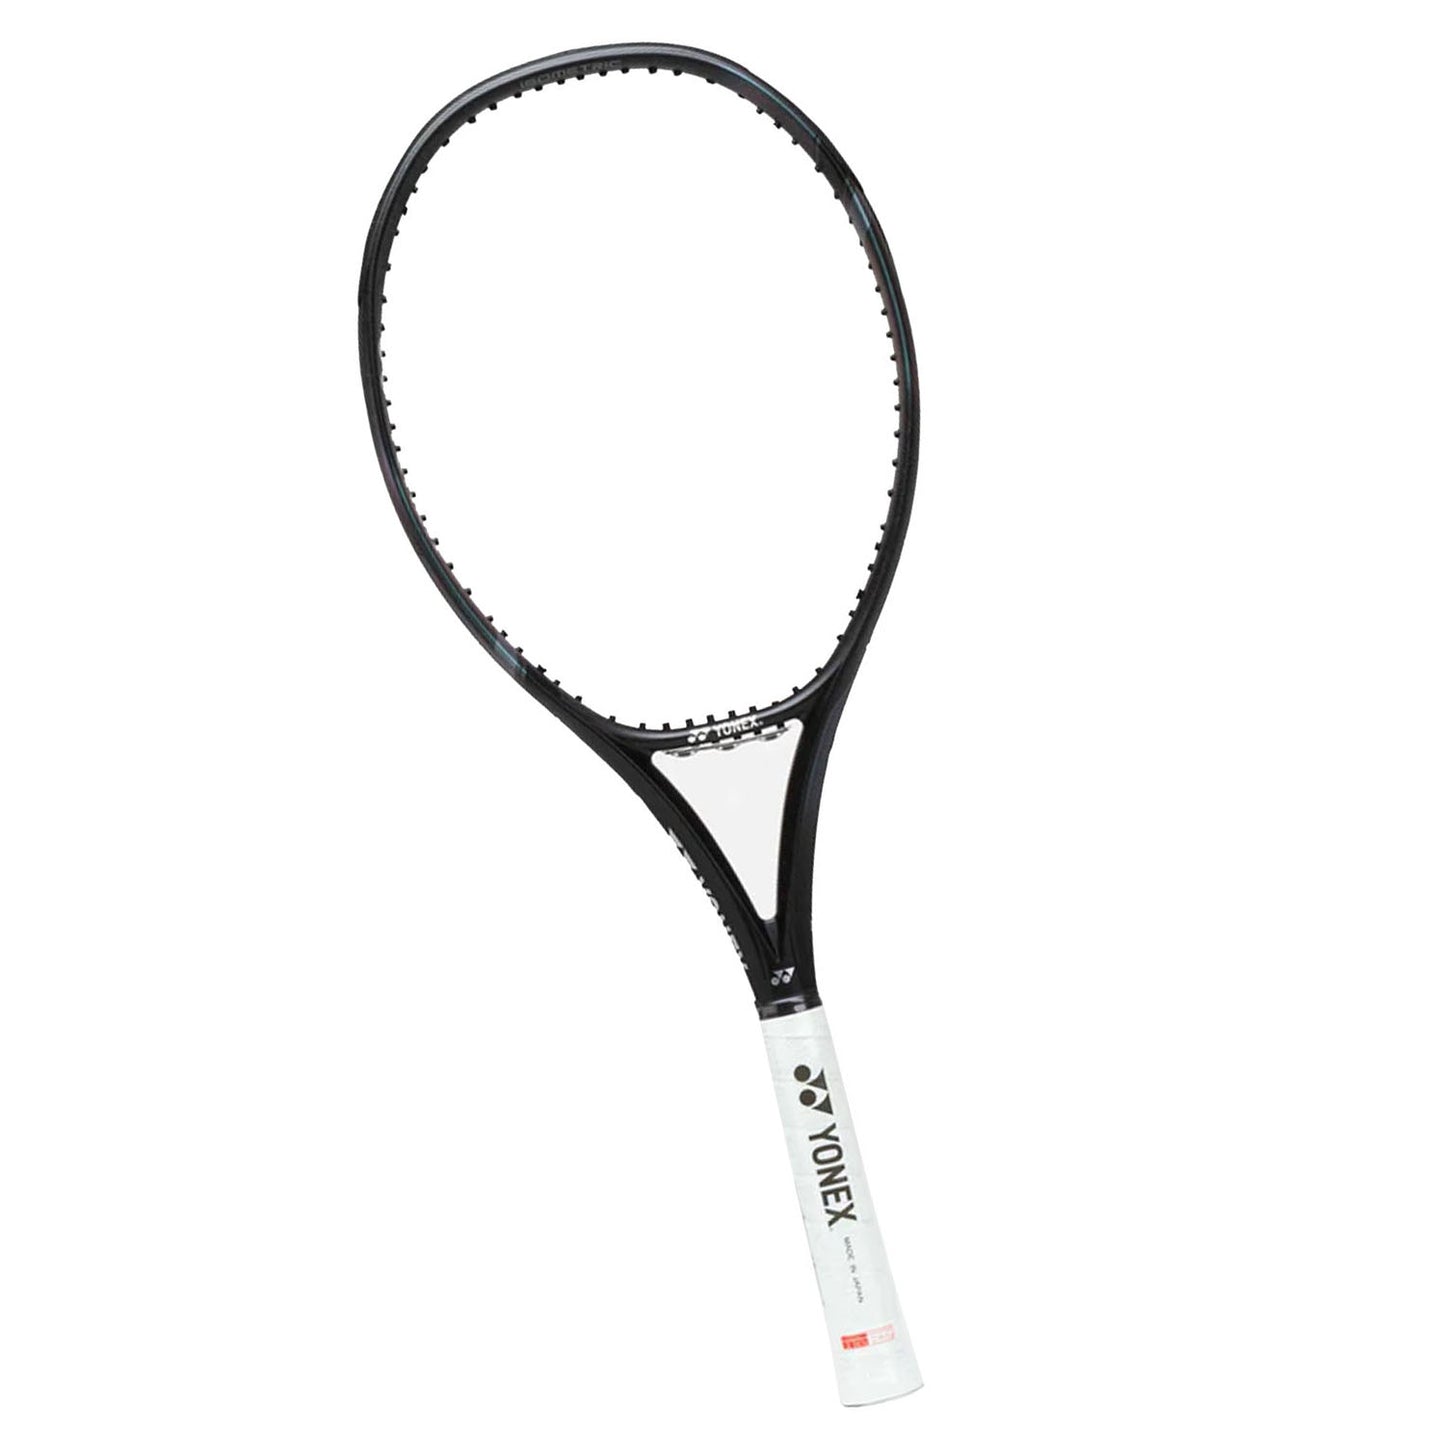 Yonex EZone 100L Tennis Racquet, Aqua Night Black - Best Price online Prokicksports.com